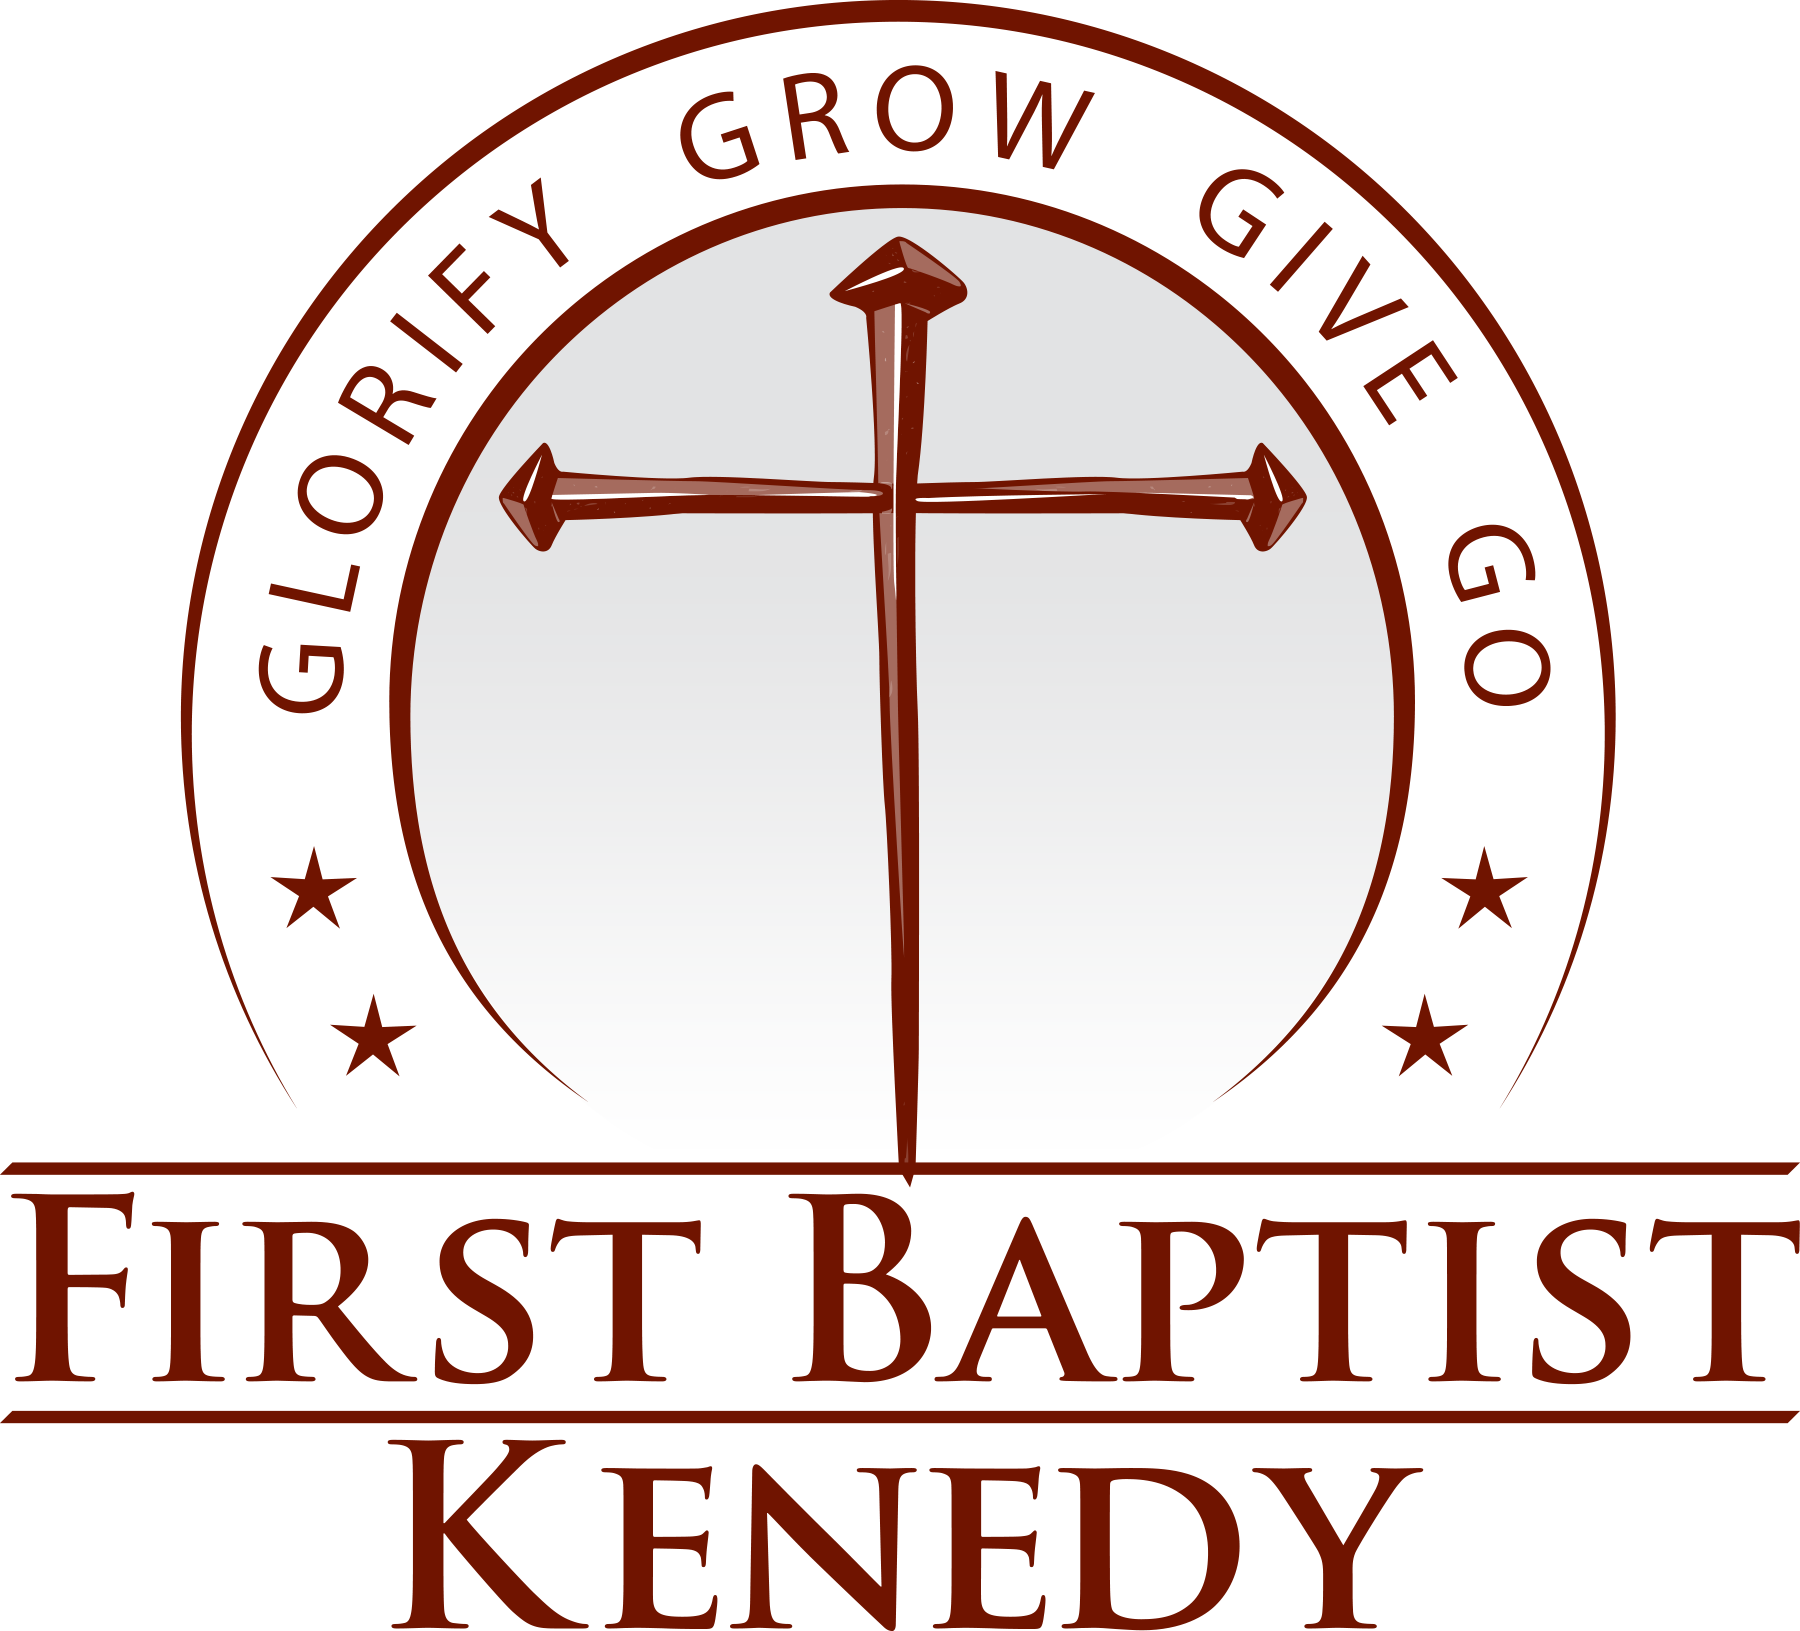 First Baptist Kenedy